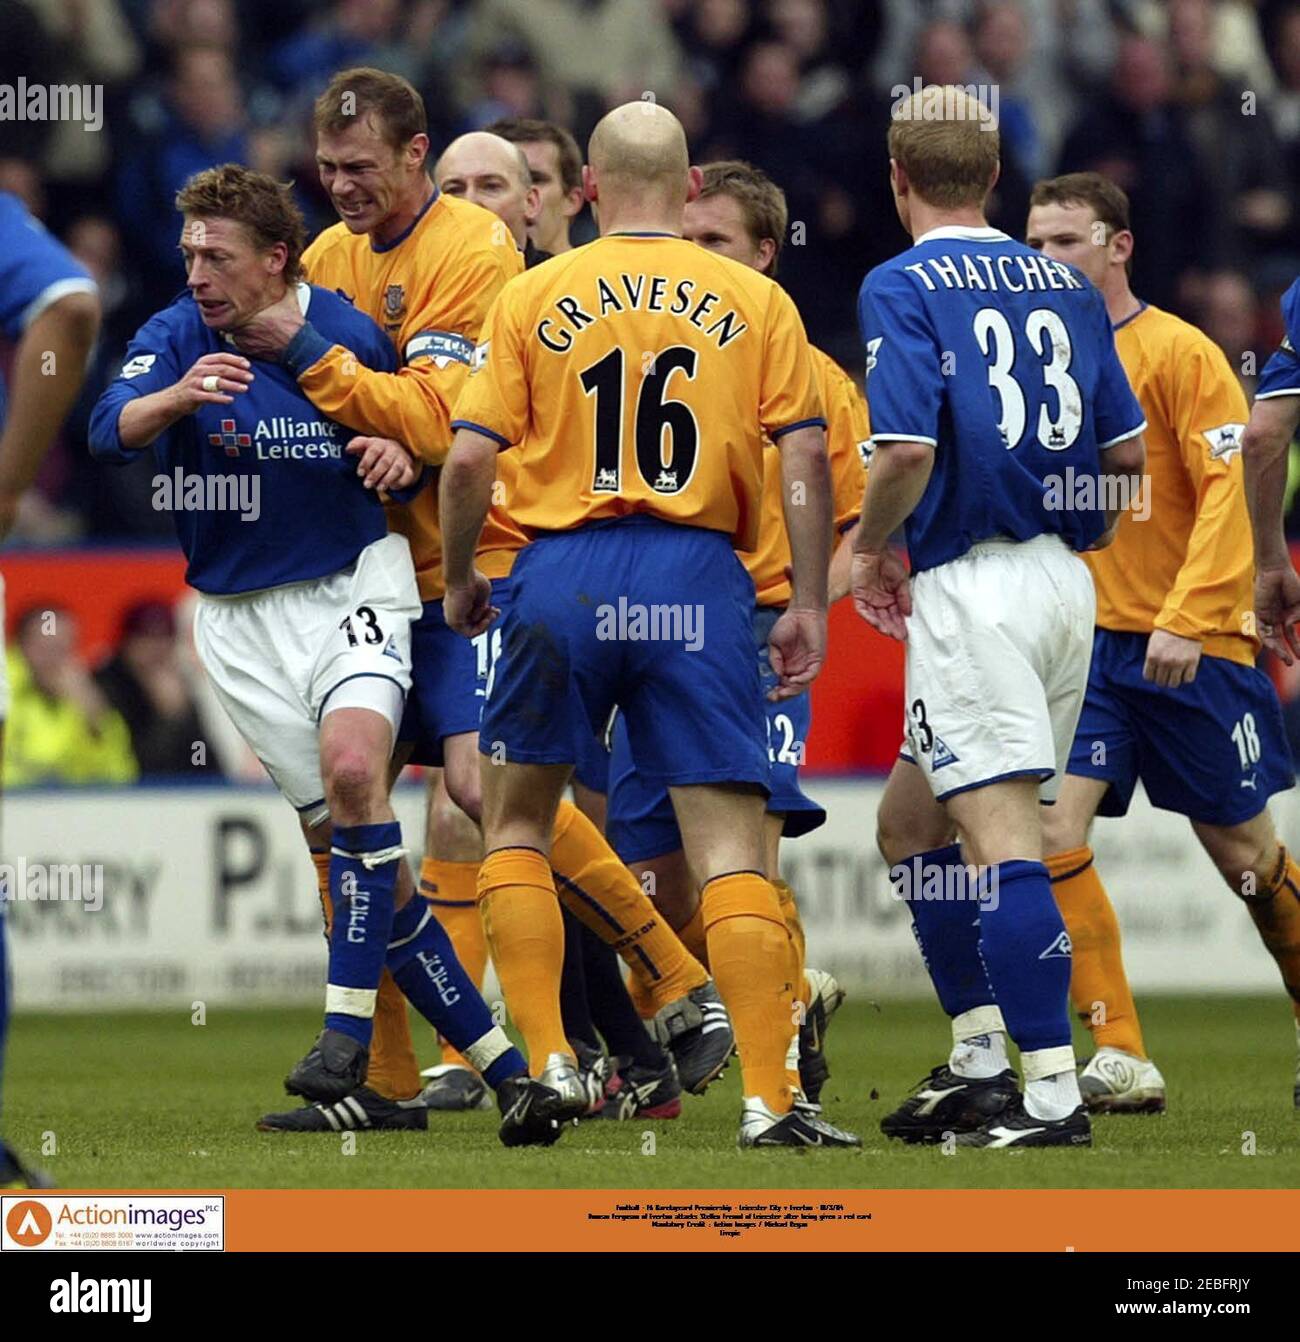 Football - FA Barclaycard - Leicester City v Everton - 20/3/04 Duncan Ferguson of Everton attacks